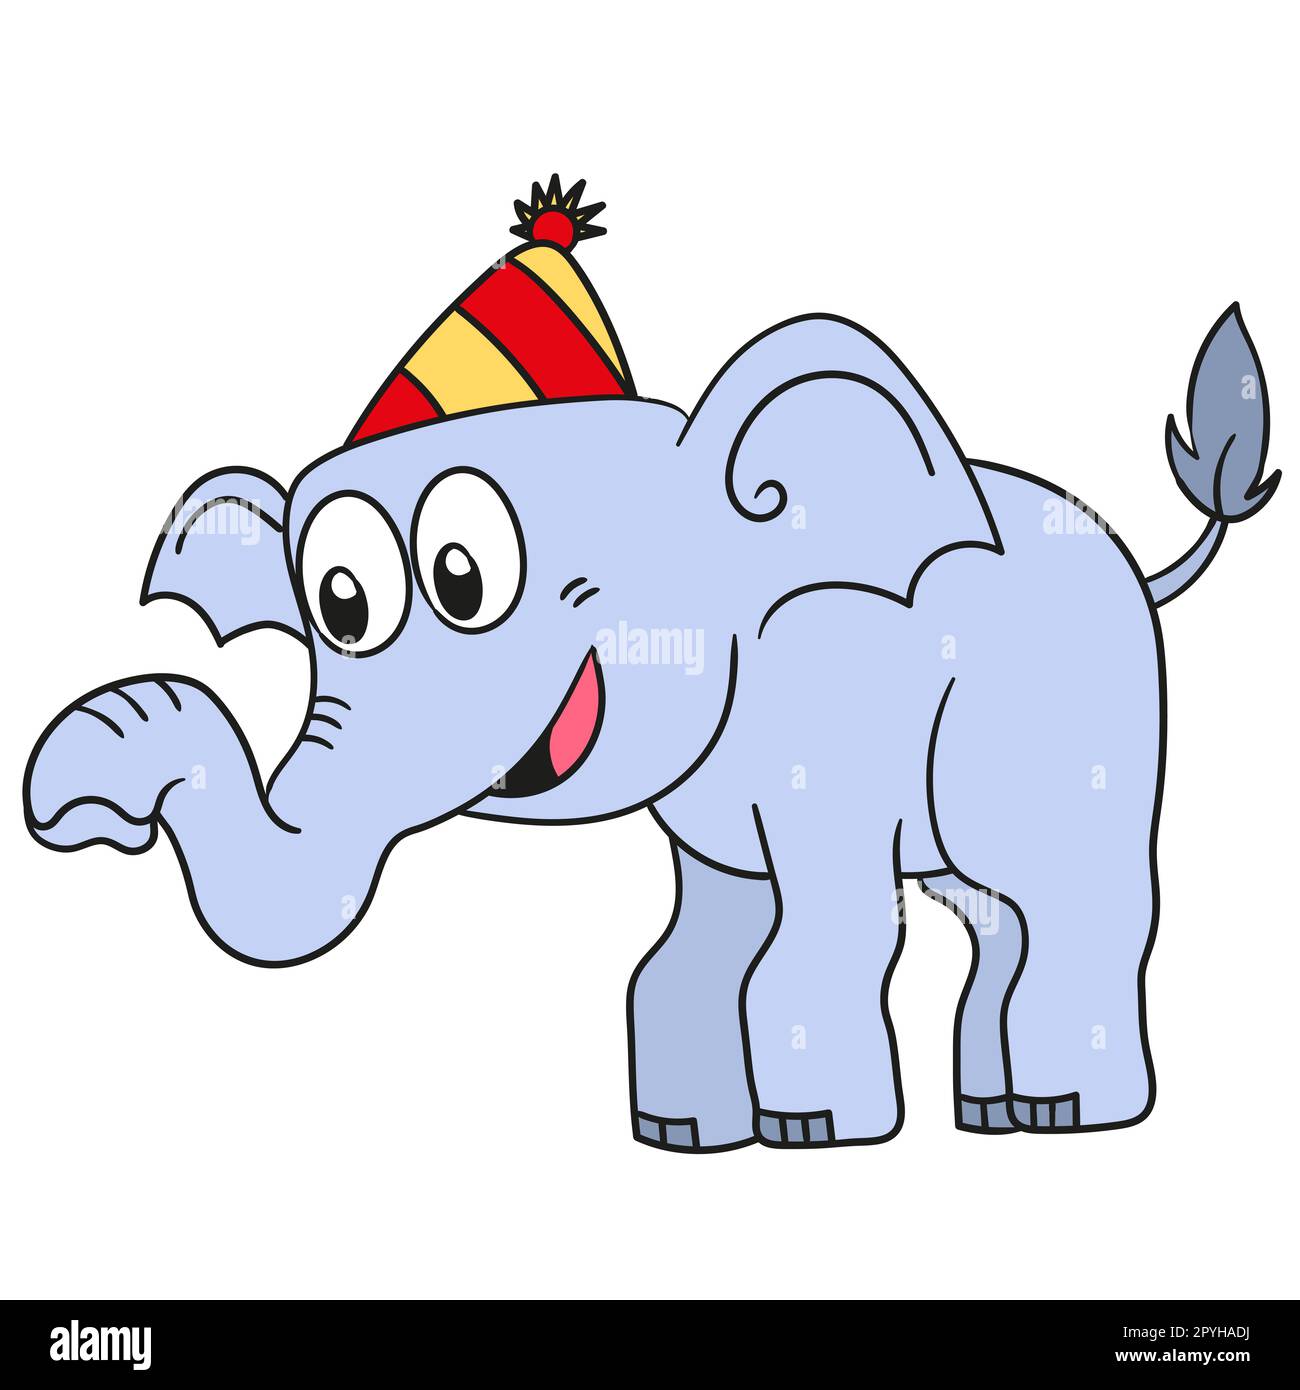 an elephant celebrating a birthday. doodle icon image Stock Photo